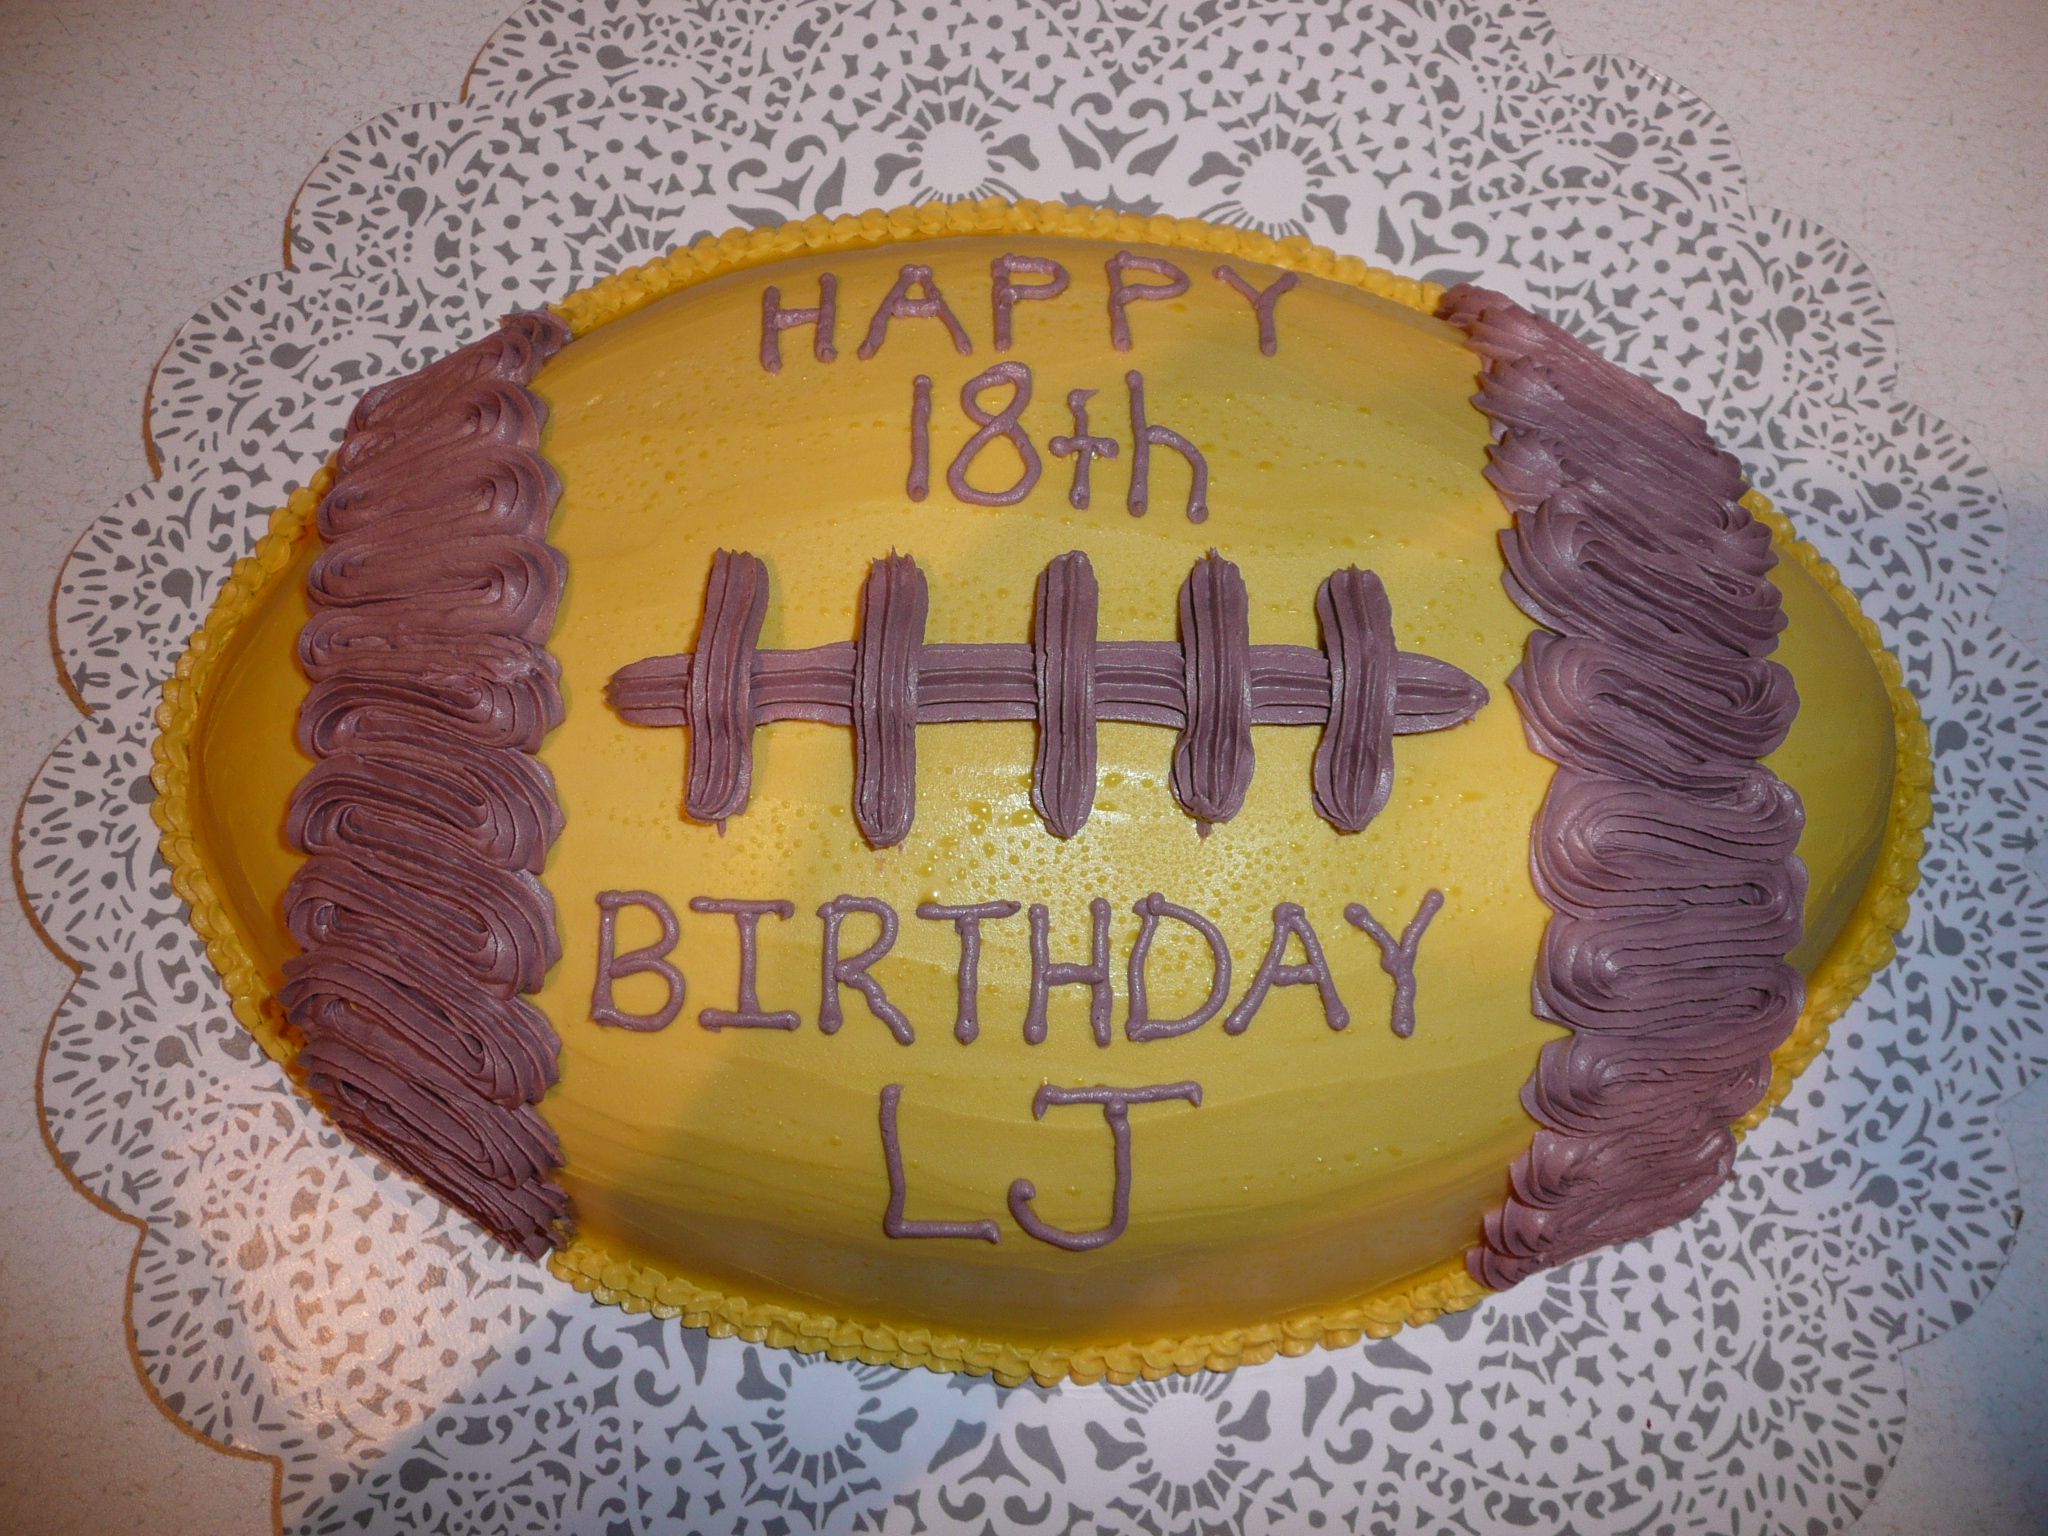 Football Themed Birthday Cake